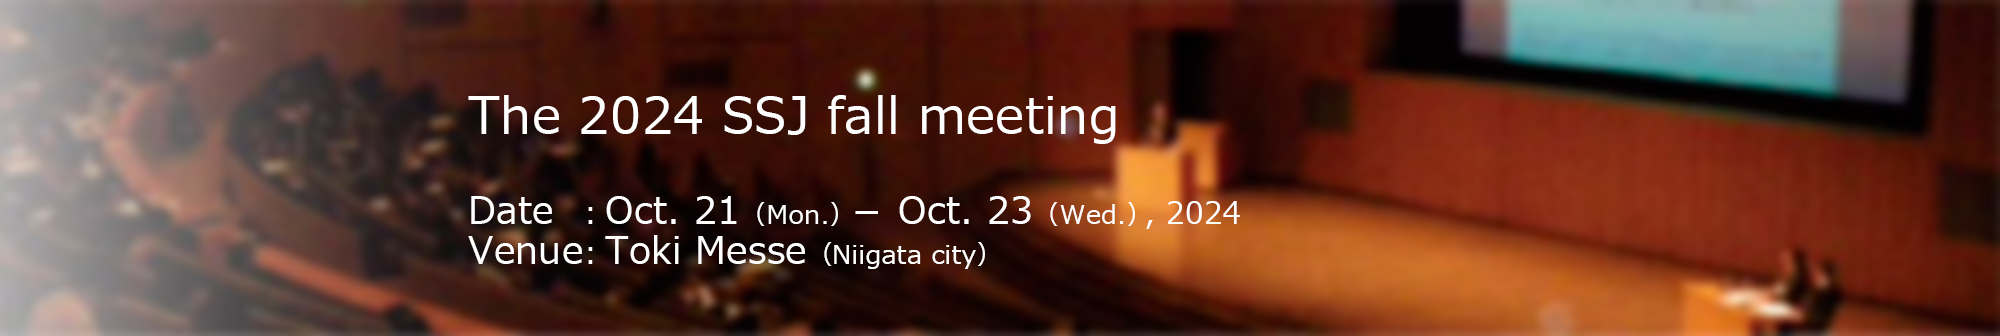 The SSJ fall meeting